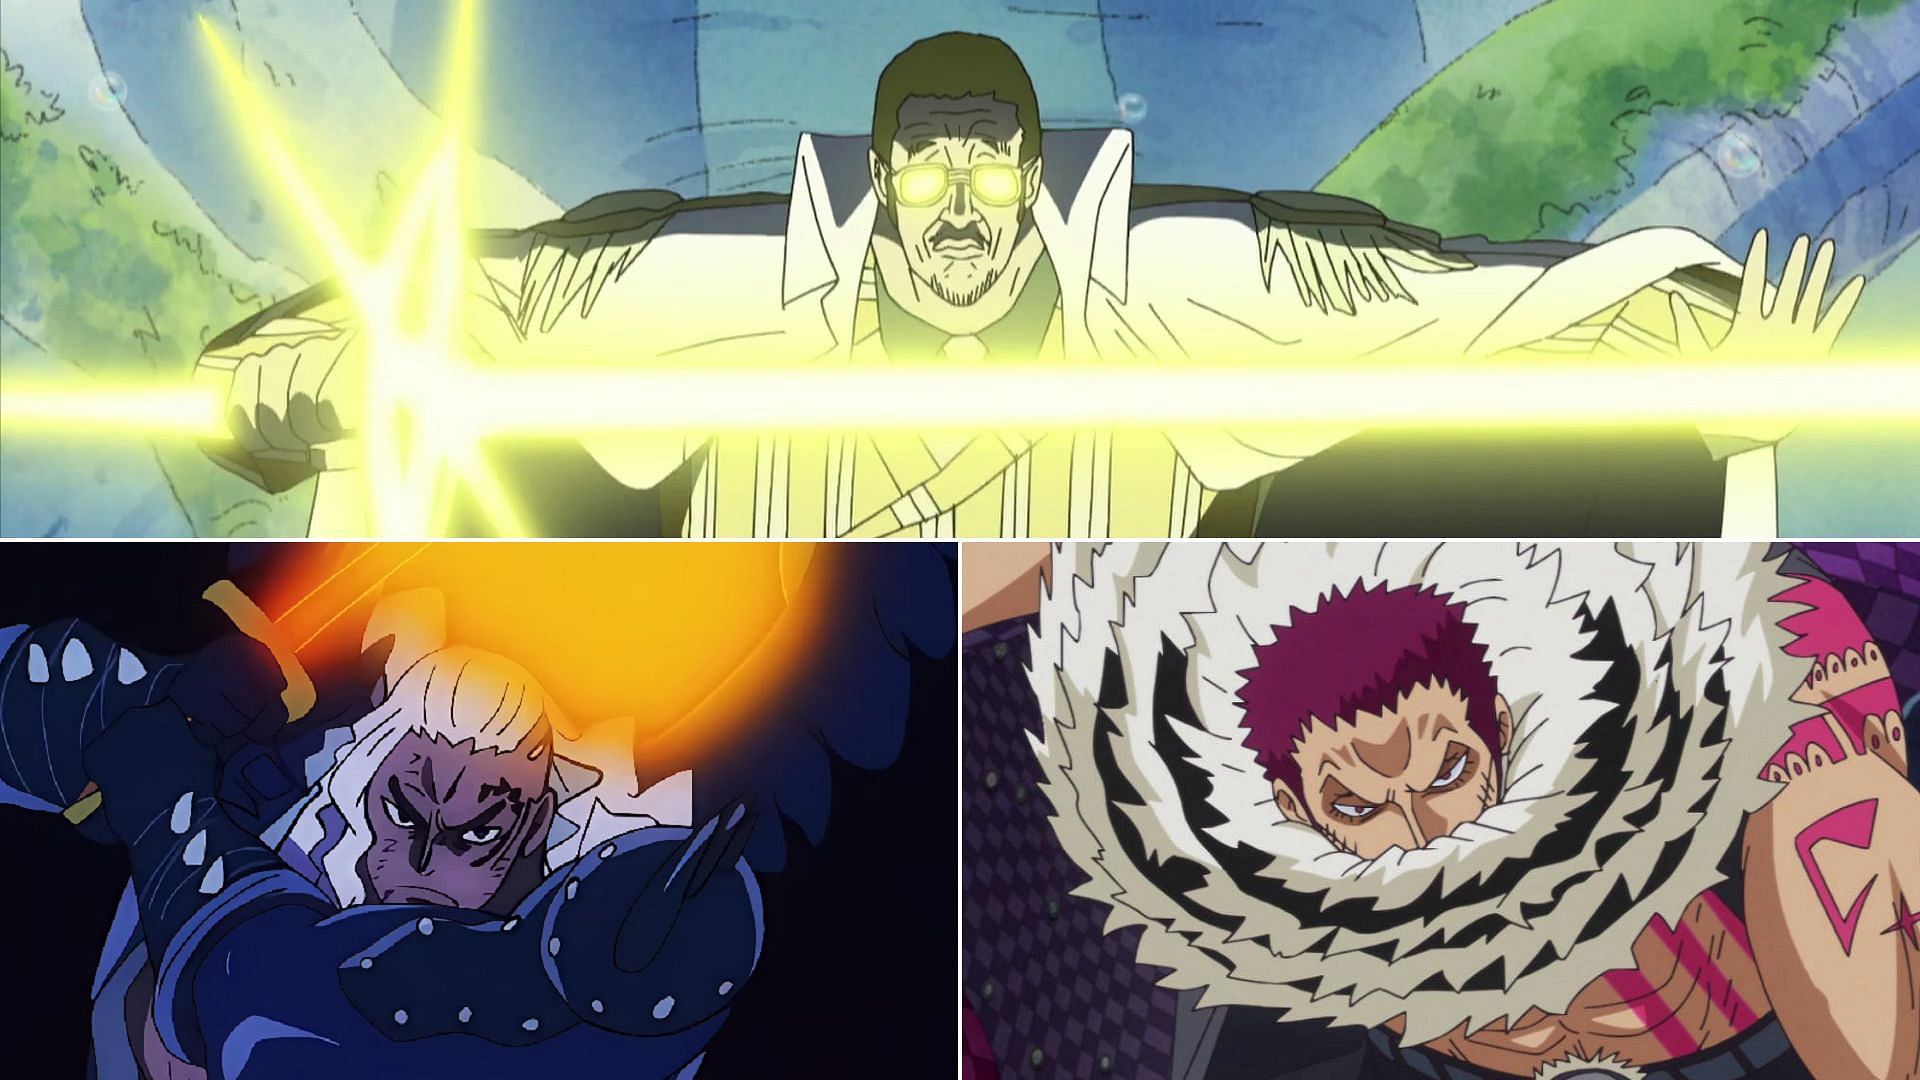 Kizaru, King, and Katakuri (Image via Toei Animation, One Piece)